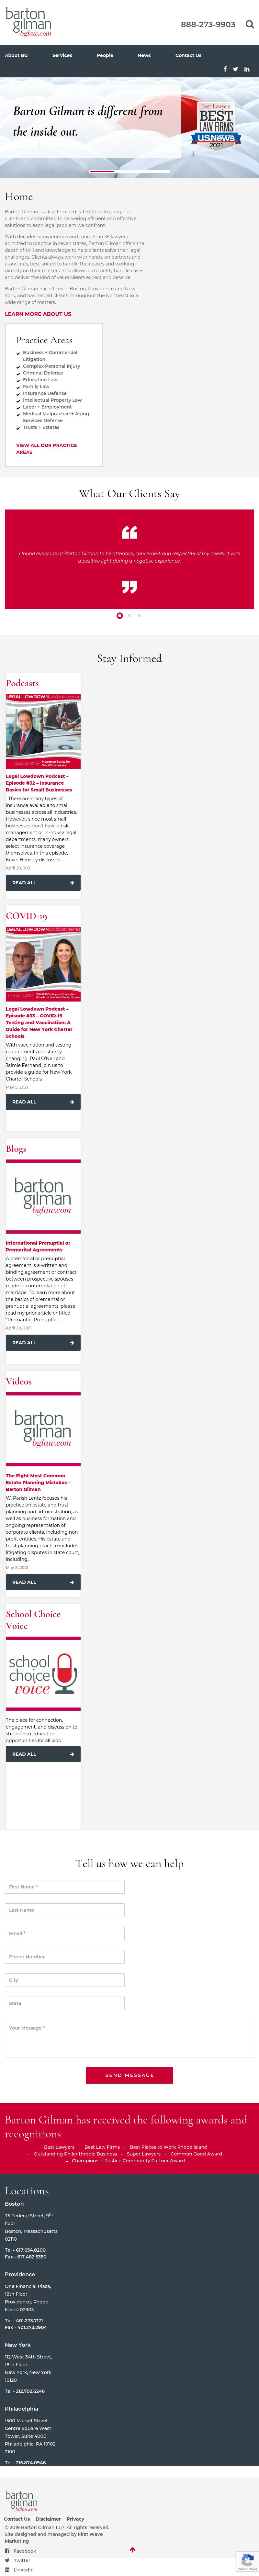 Barton Gilman LLP - Boston MA Lawyers